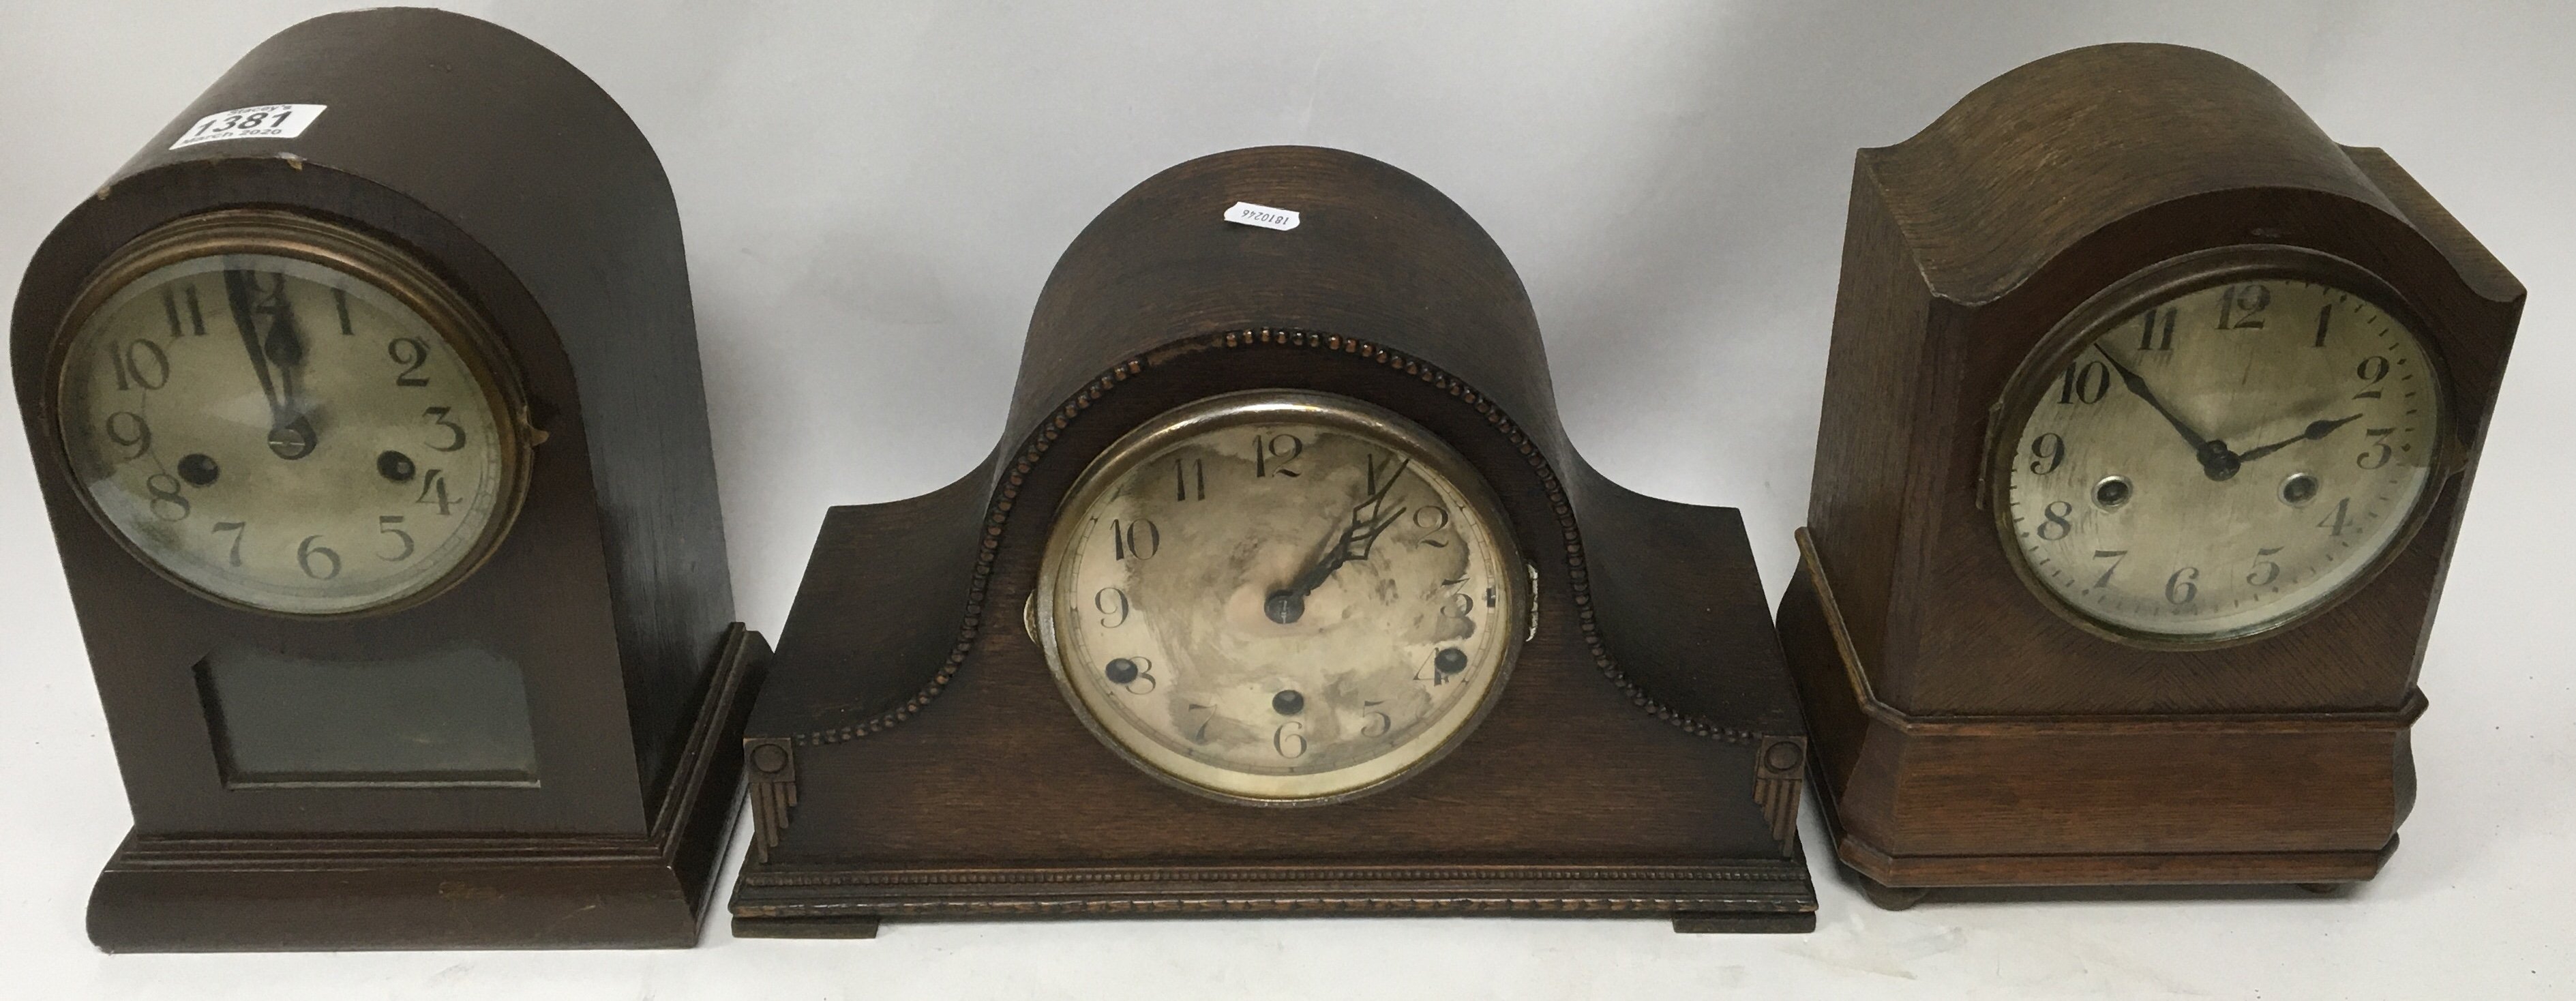 3 1920s mantle clocks.